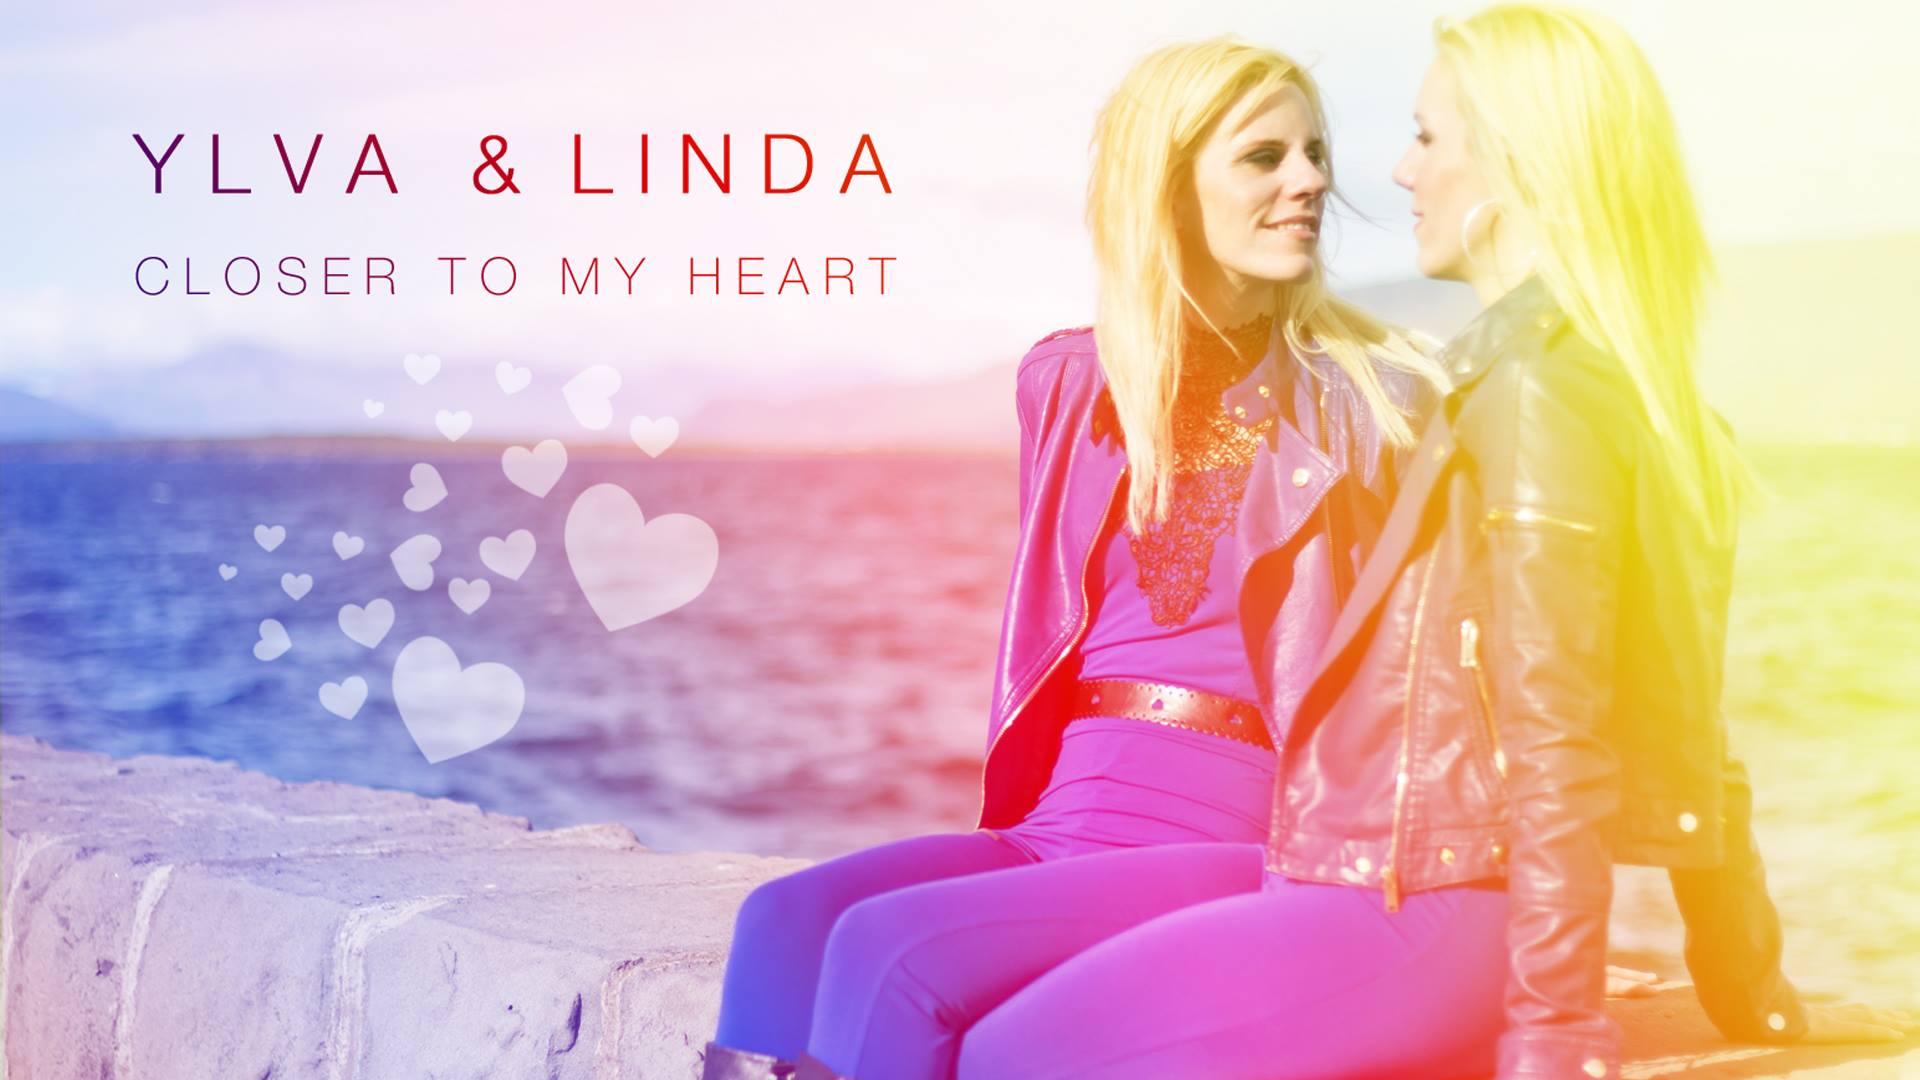 Swedish composers Ylva & Linda ready for Eurovision 2016!